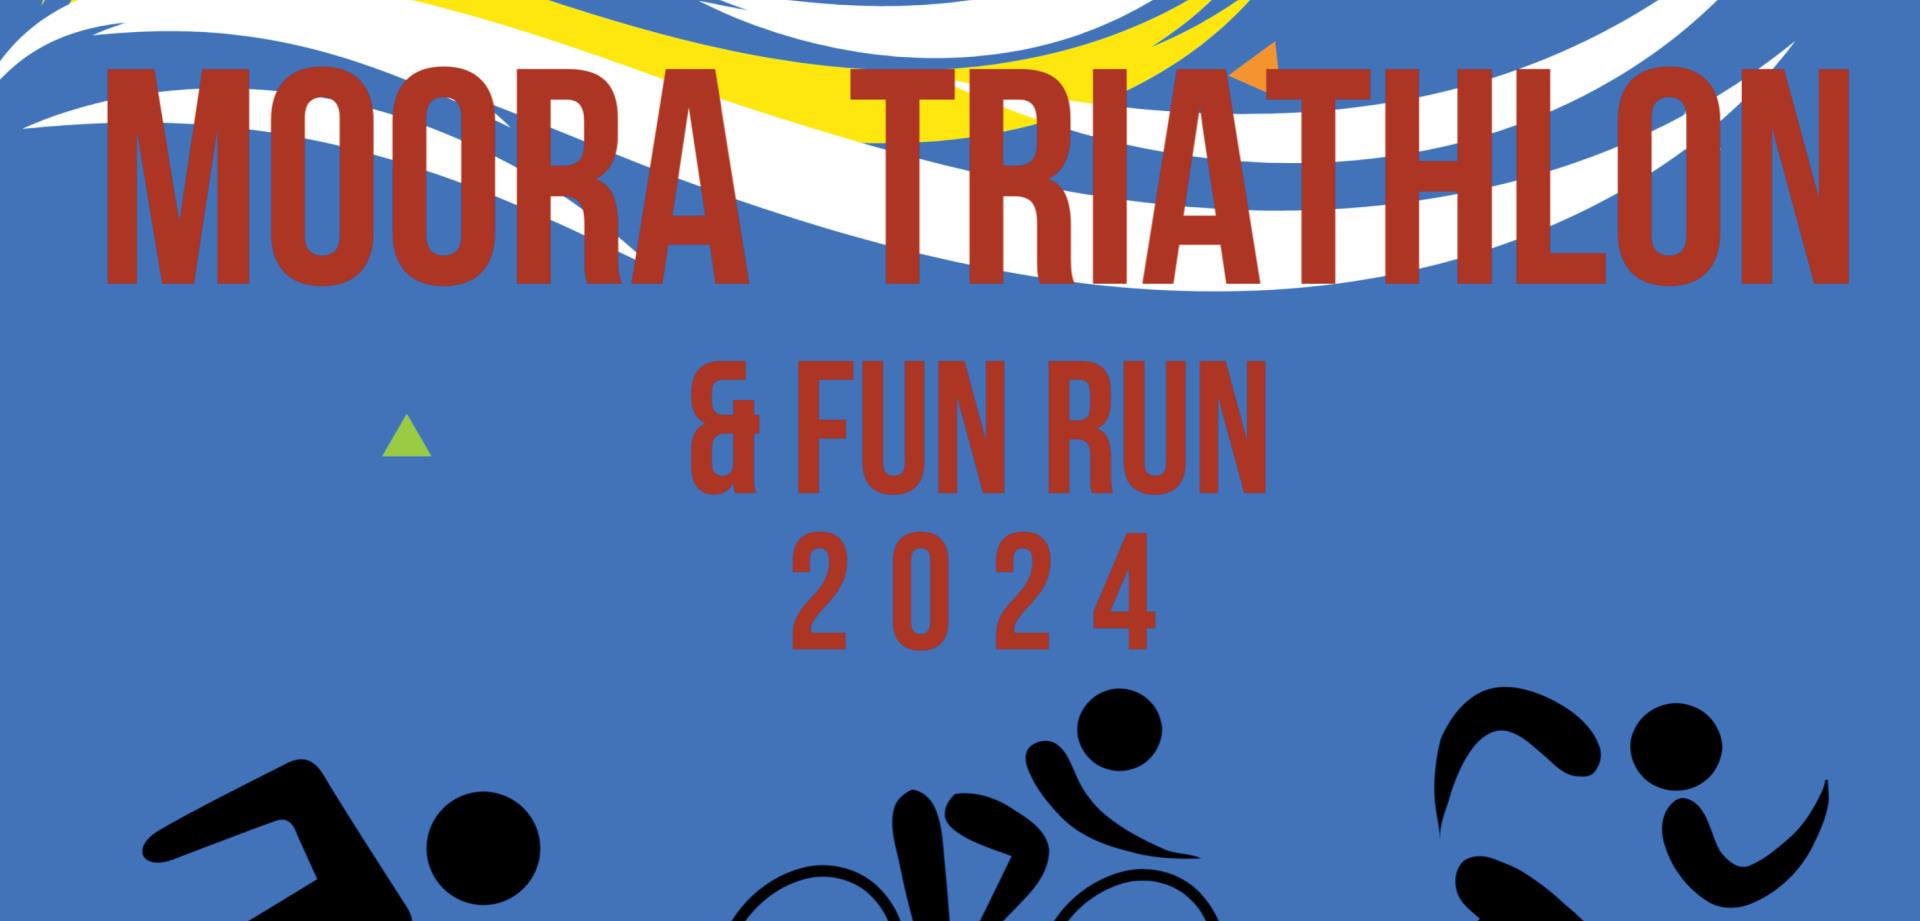 Moora Triathlon & Fun Run 2024